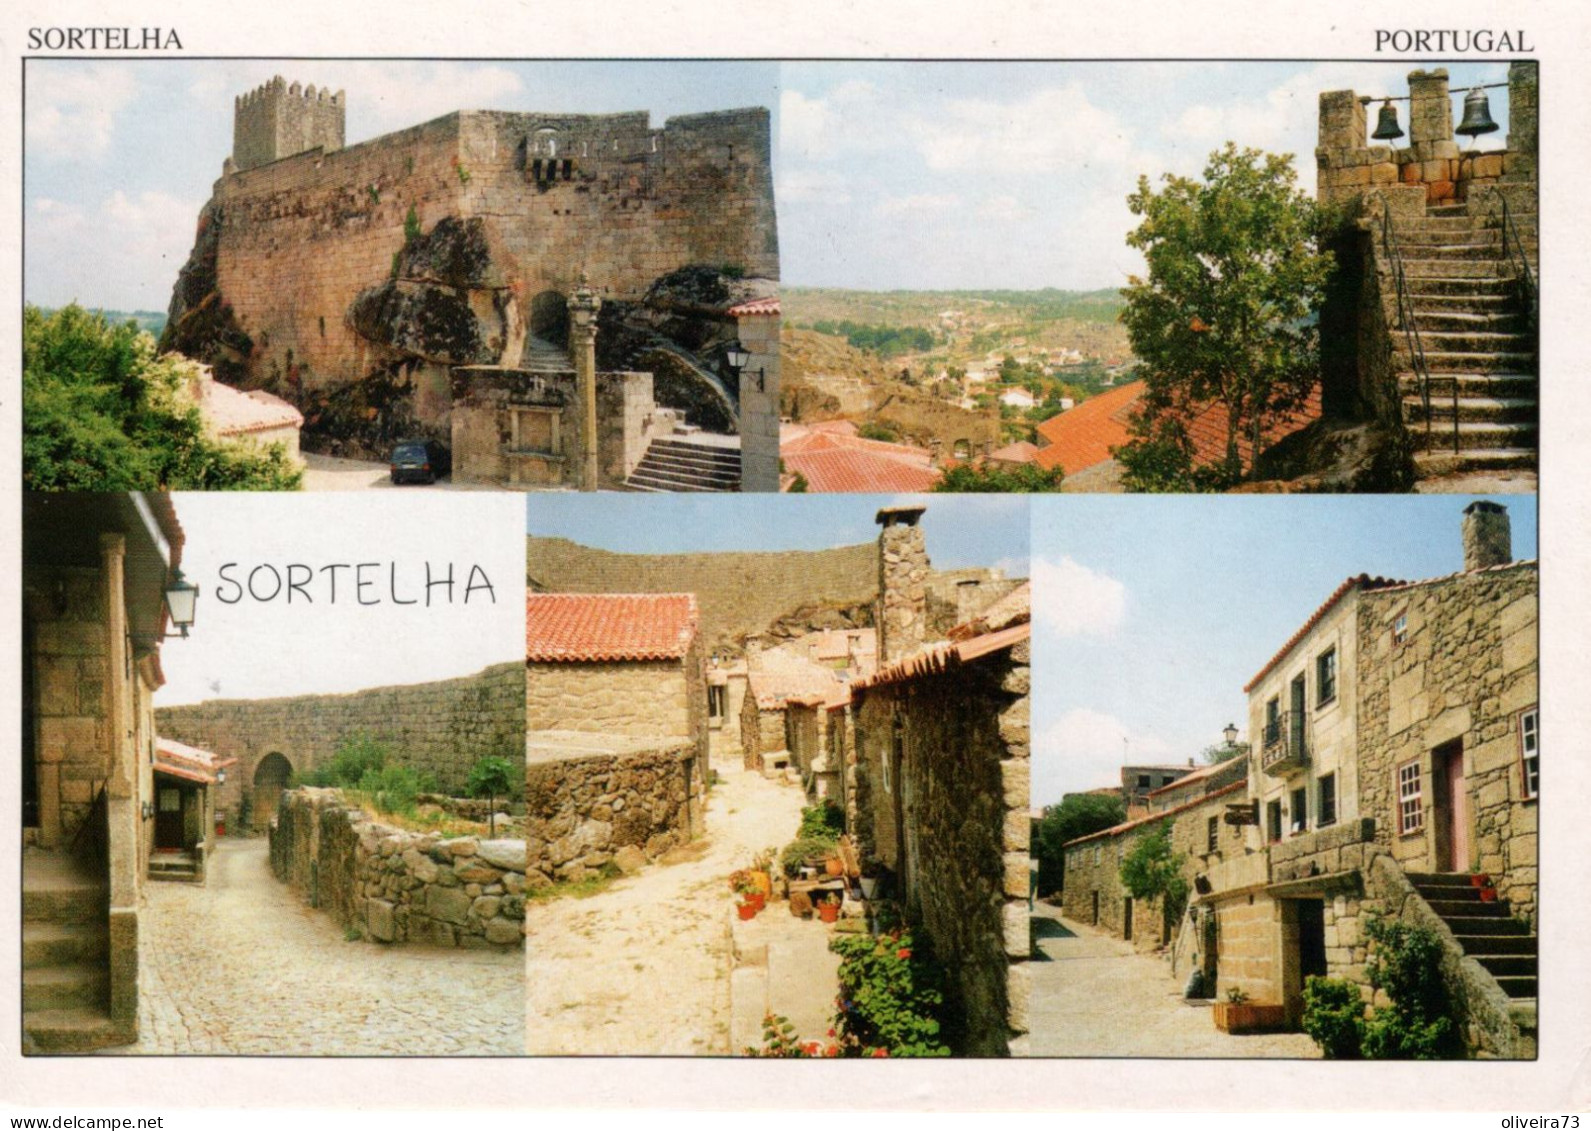 SORTELHA - PORTUGAL - Guarda